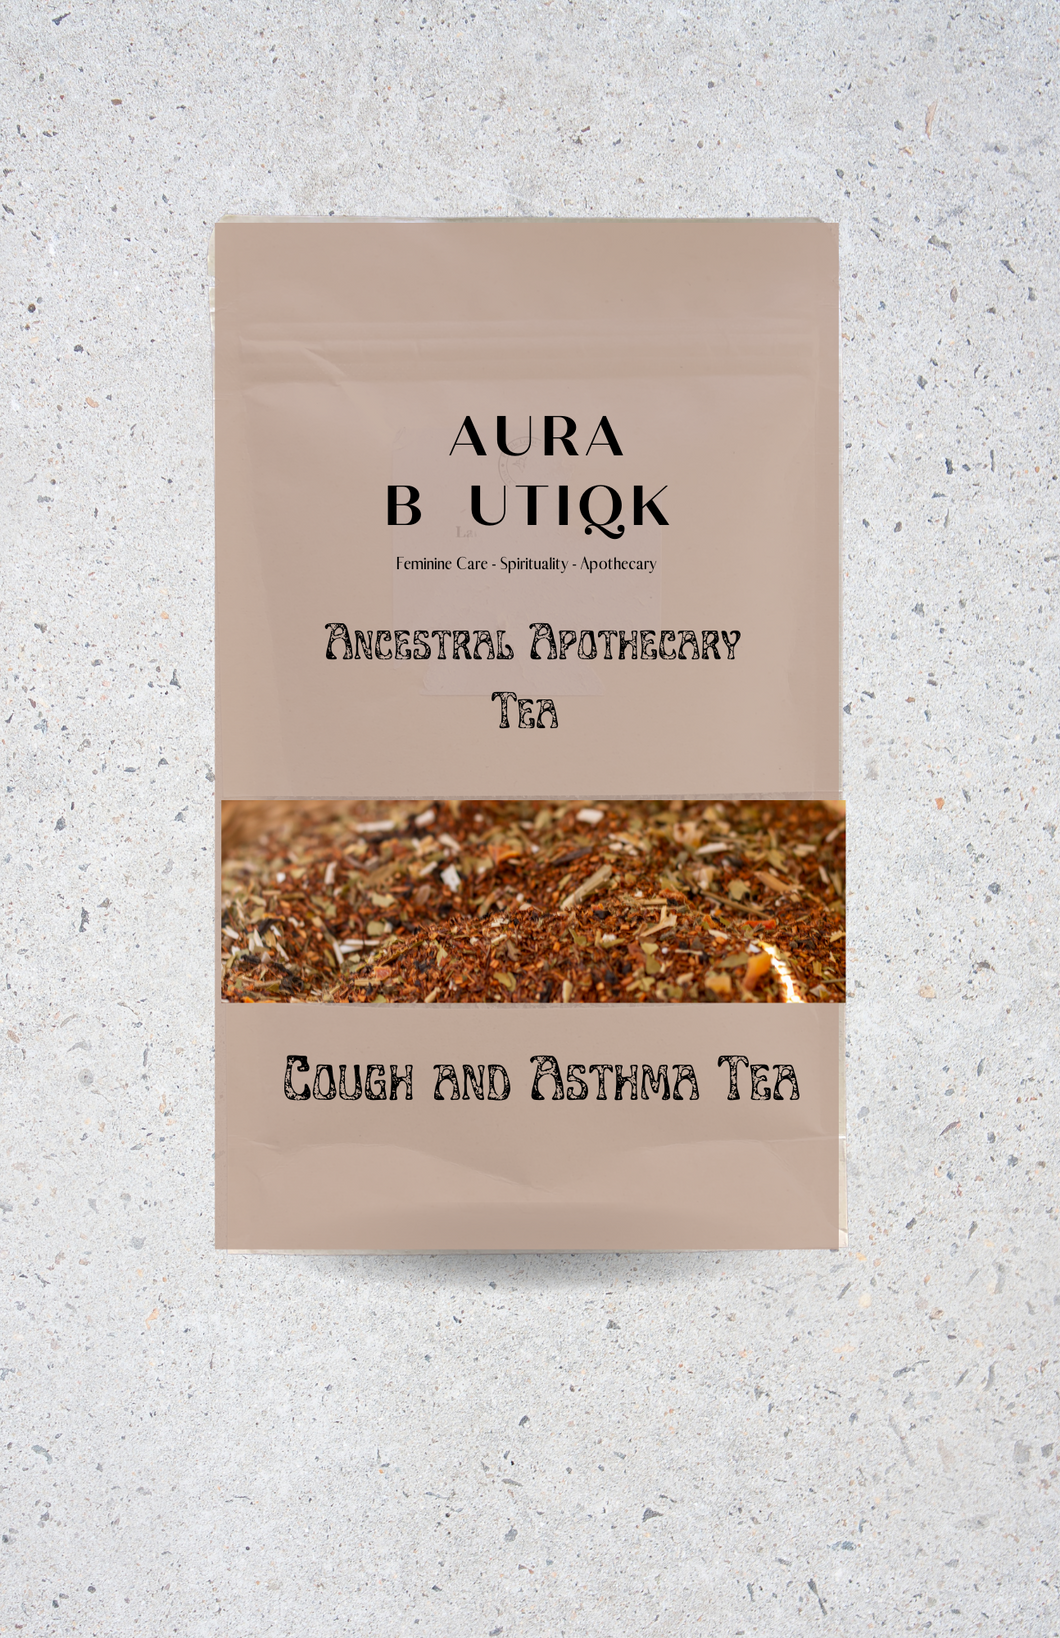 Mambo Spasmodic Cough and Asthma Tea - Aura Boutiqk